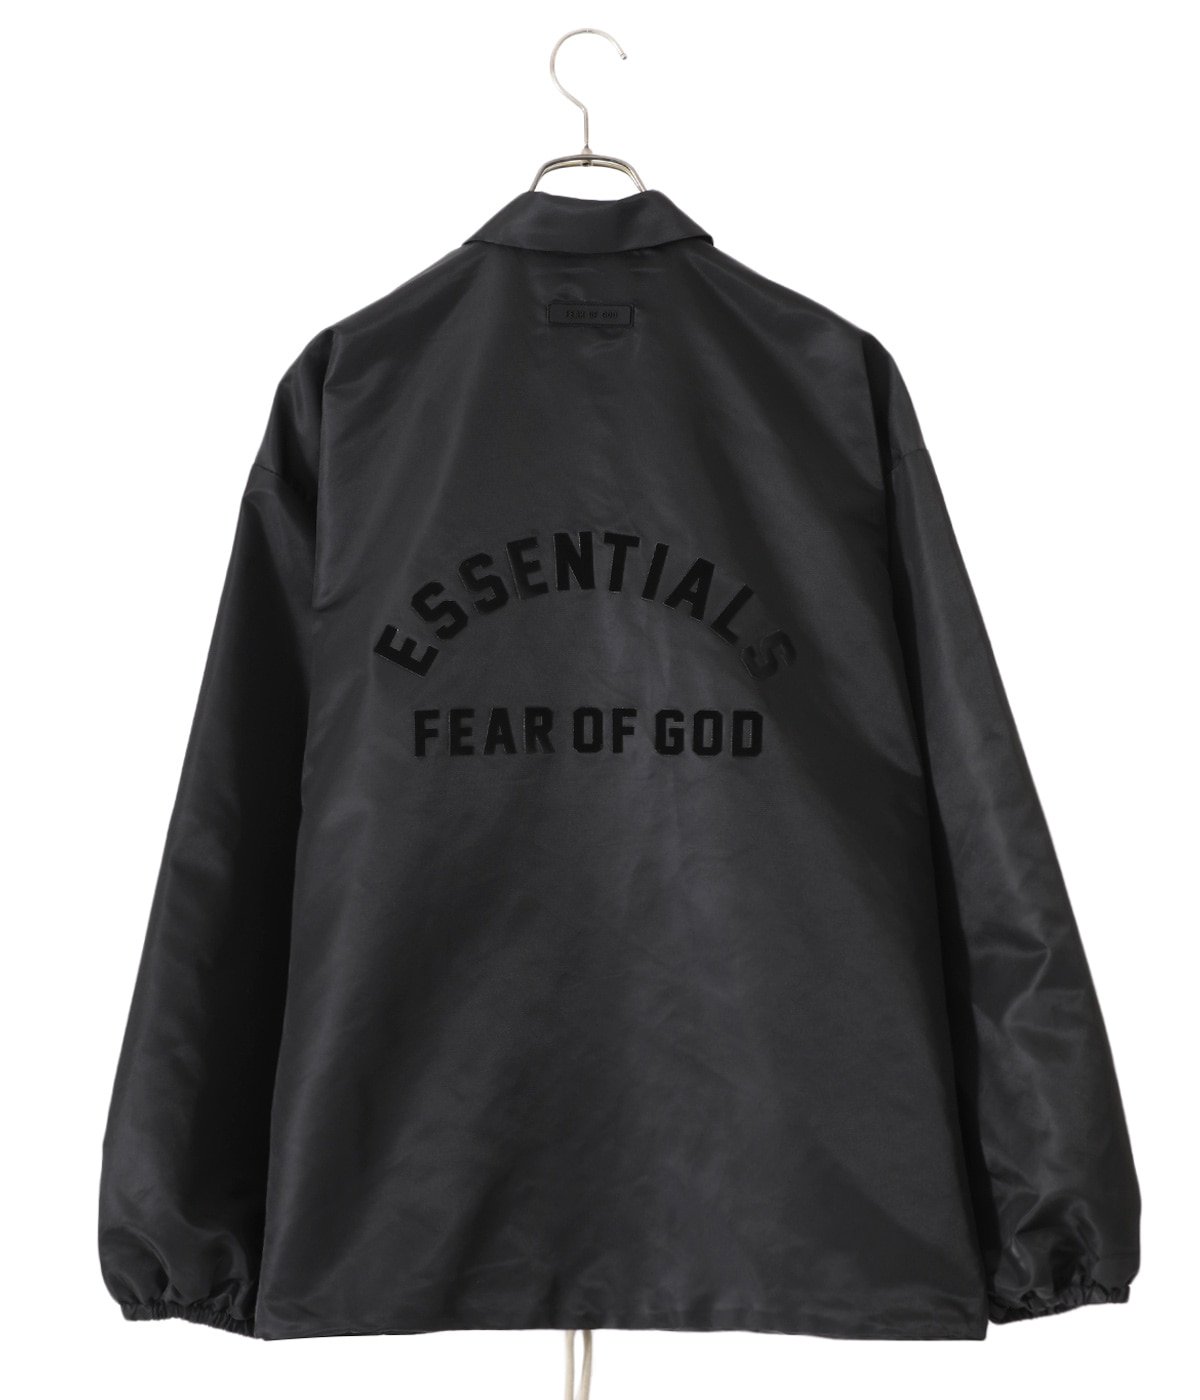 Coaches Jacket | ESSENTIALS FEAR OF GOD(エッセンシャルズ フィア